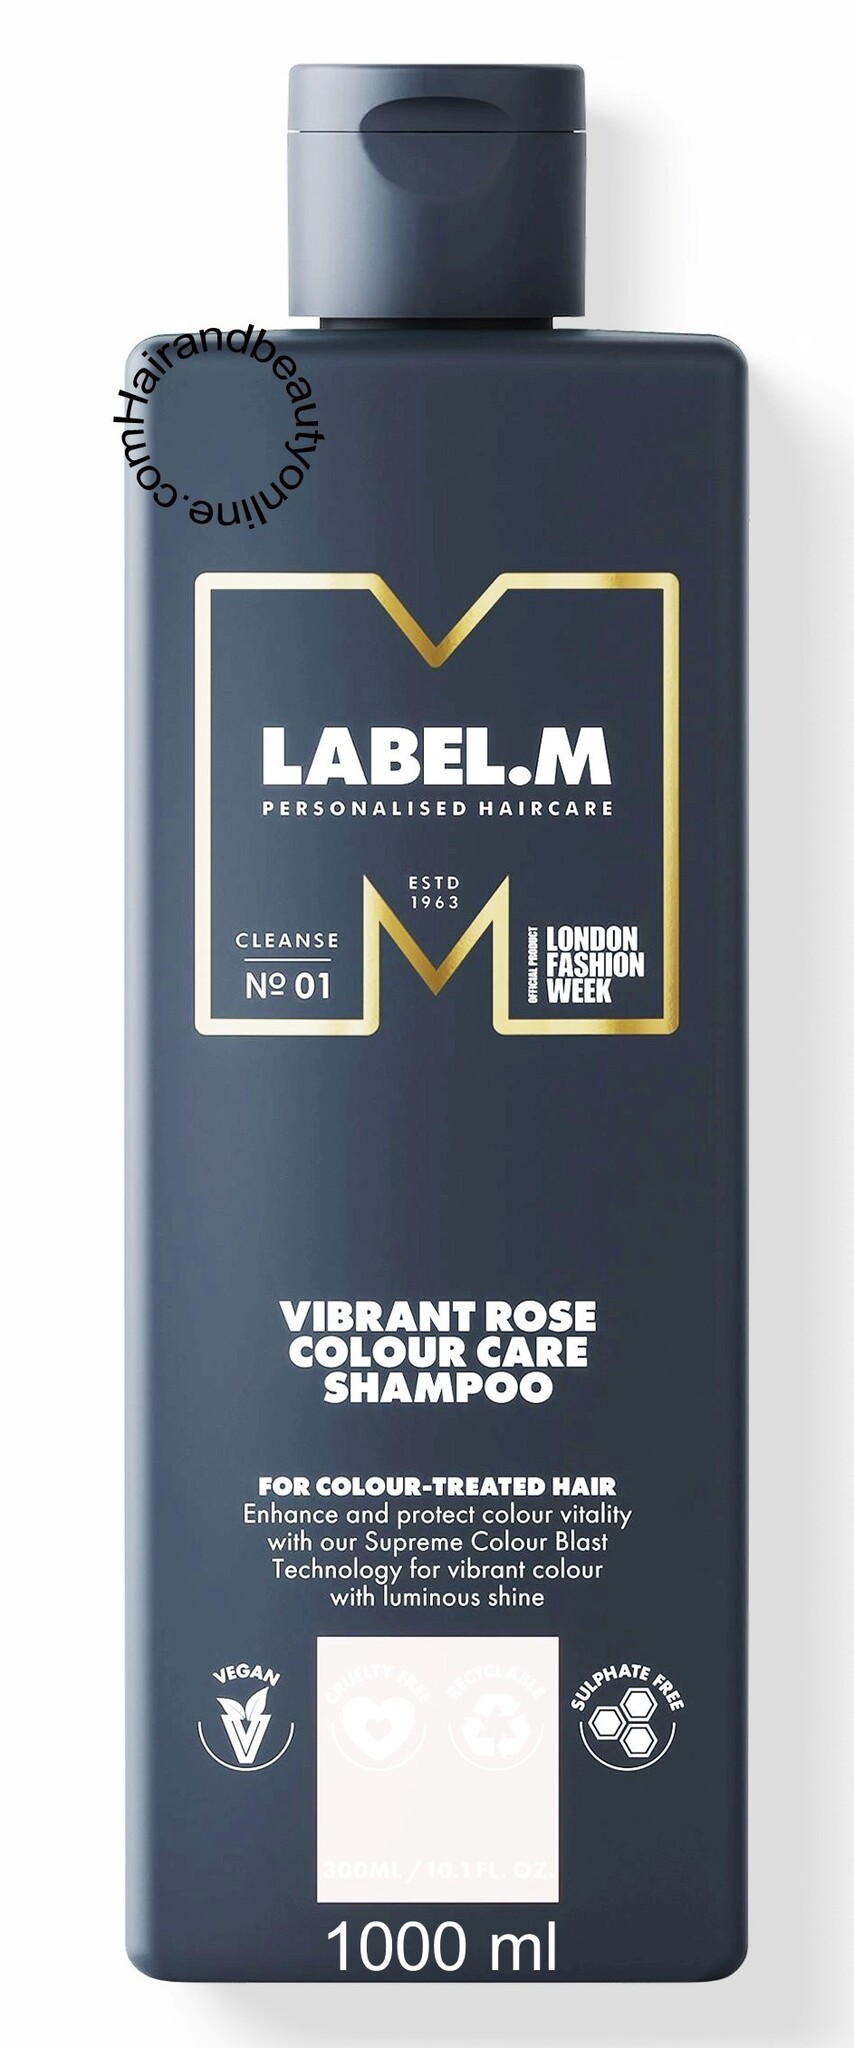 Label.m Vibrant Rose Colour Care Shampoo 1000ml